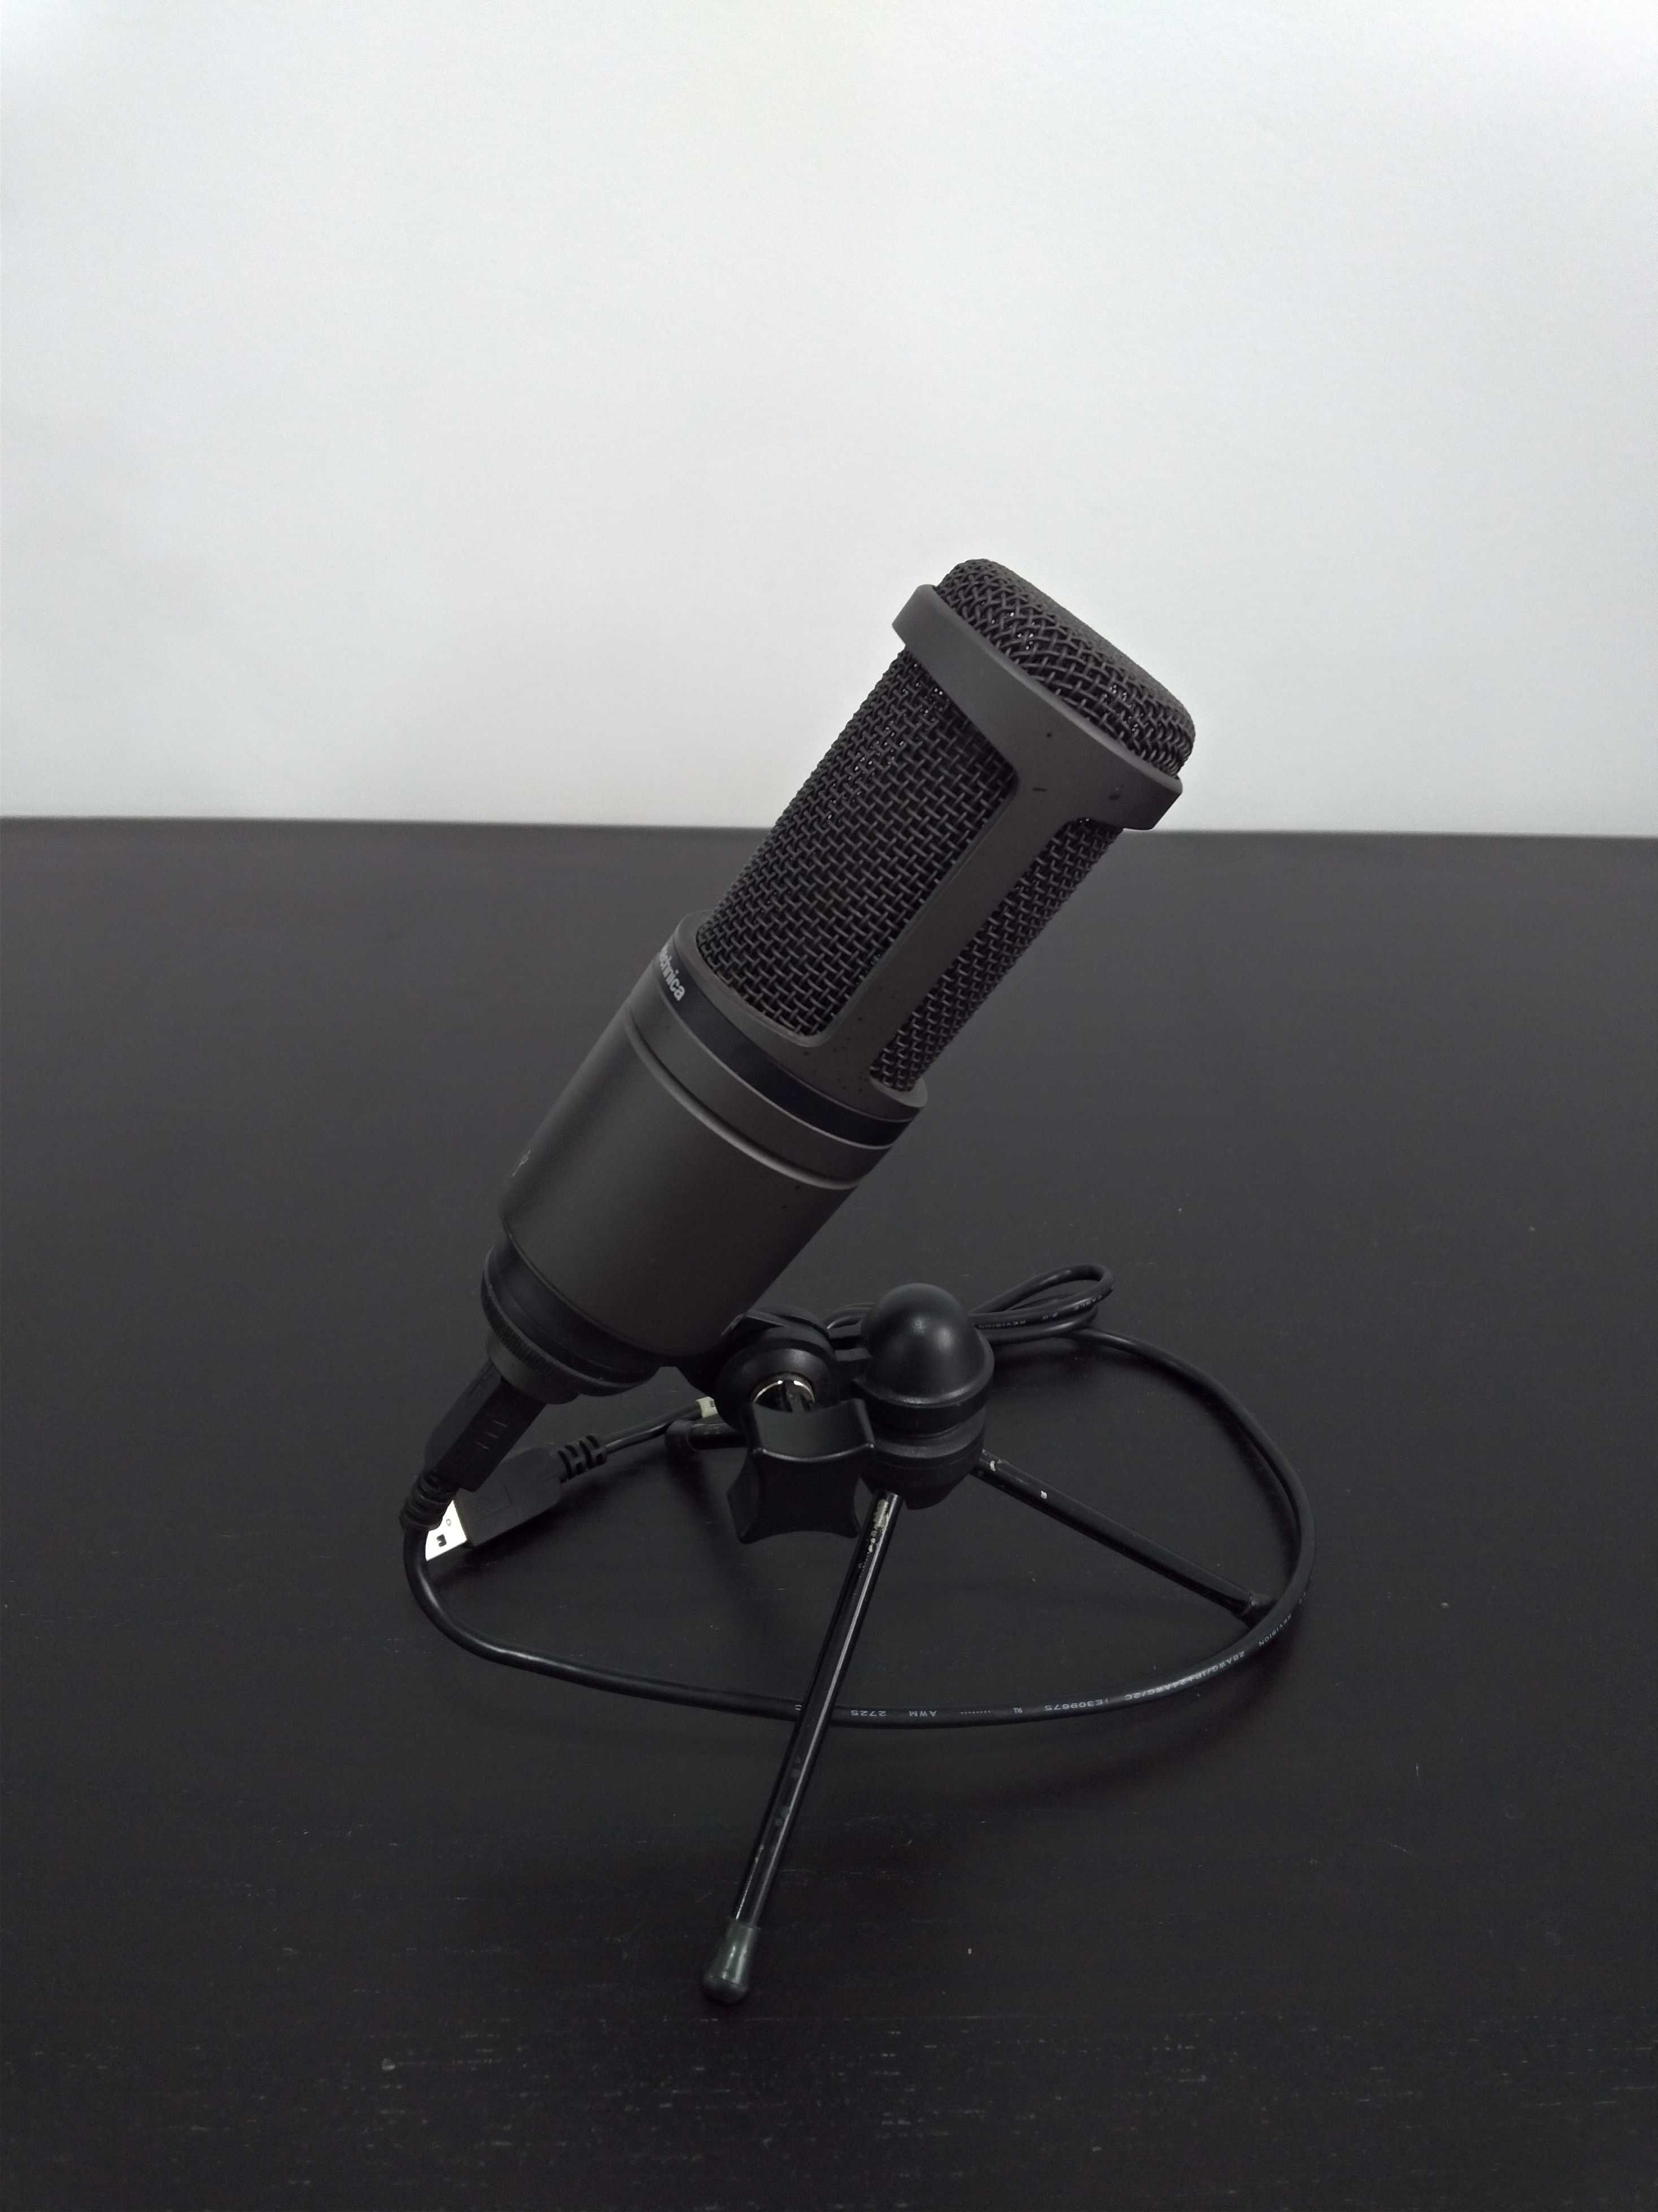 Novelist Melbourne crater Microfon Audio-Tehnica AT2020 USB + Bonus Filtru Microfon (Podcast) Baicoi  • OLX.ro